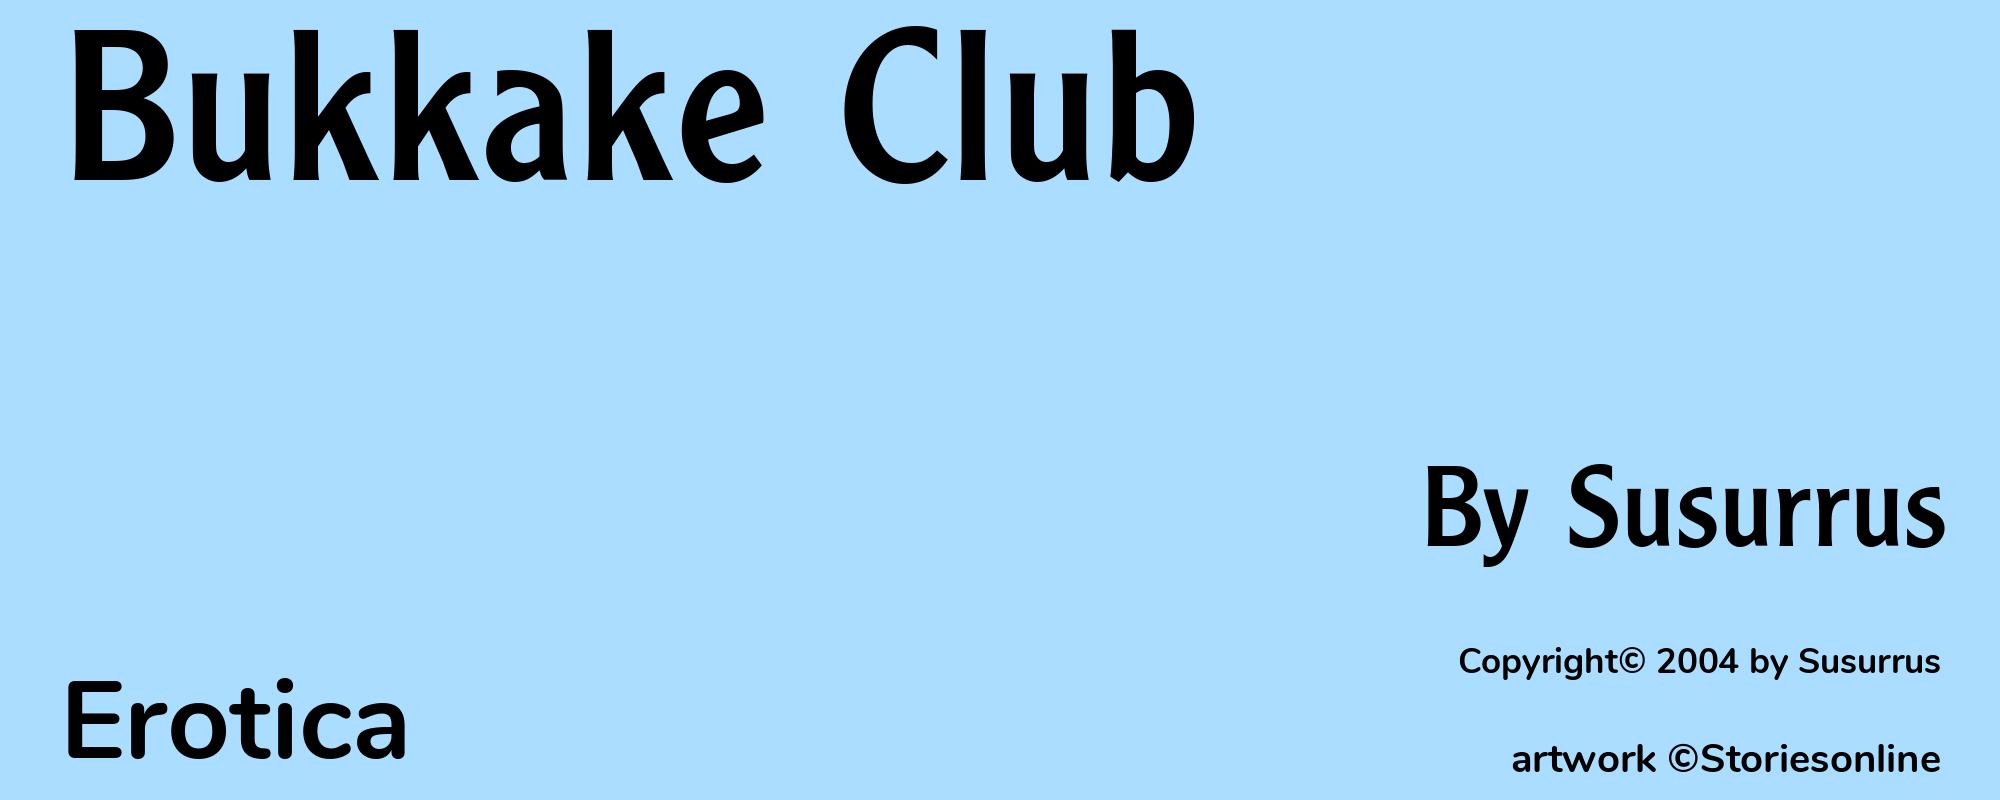 Bukkake Club - Cover